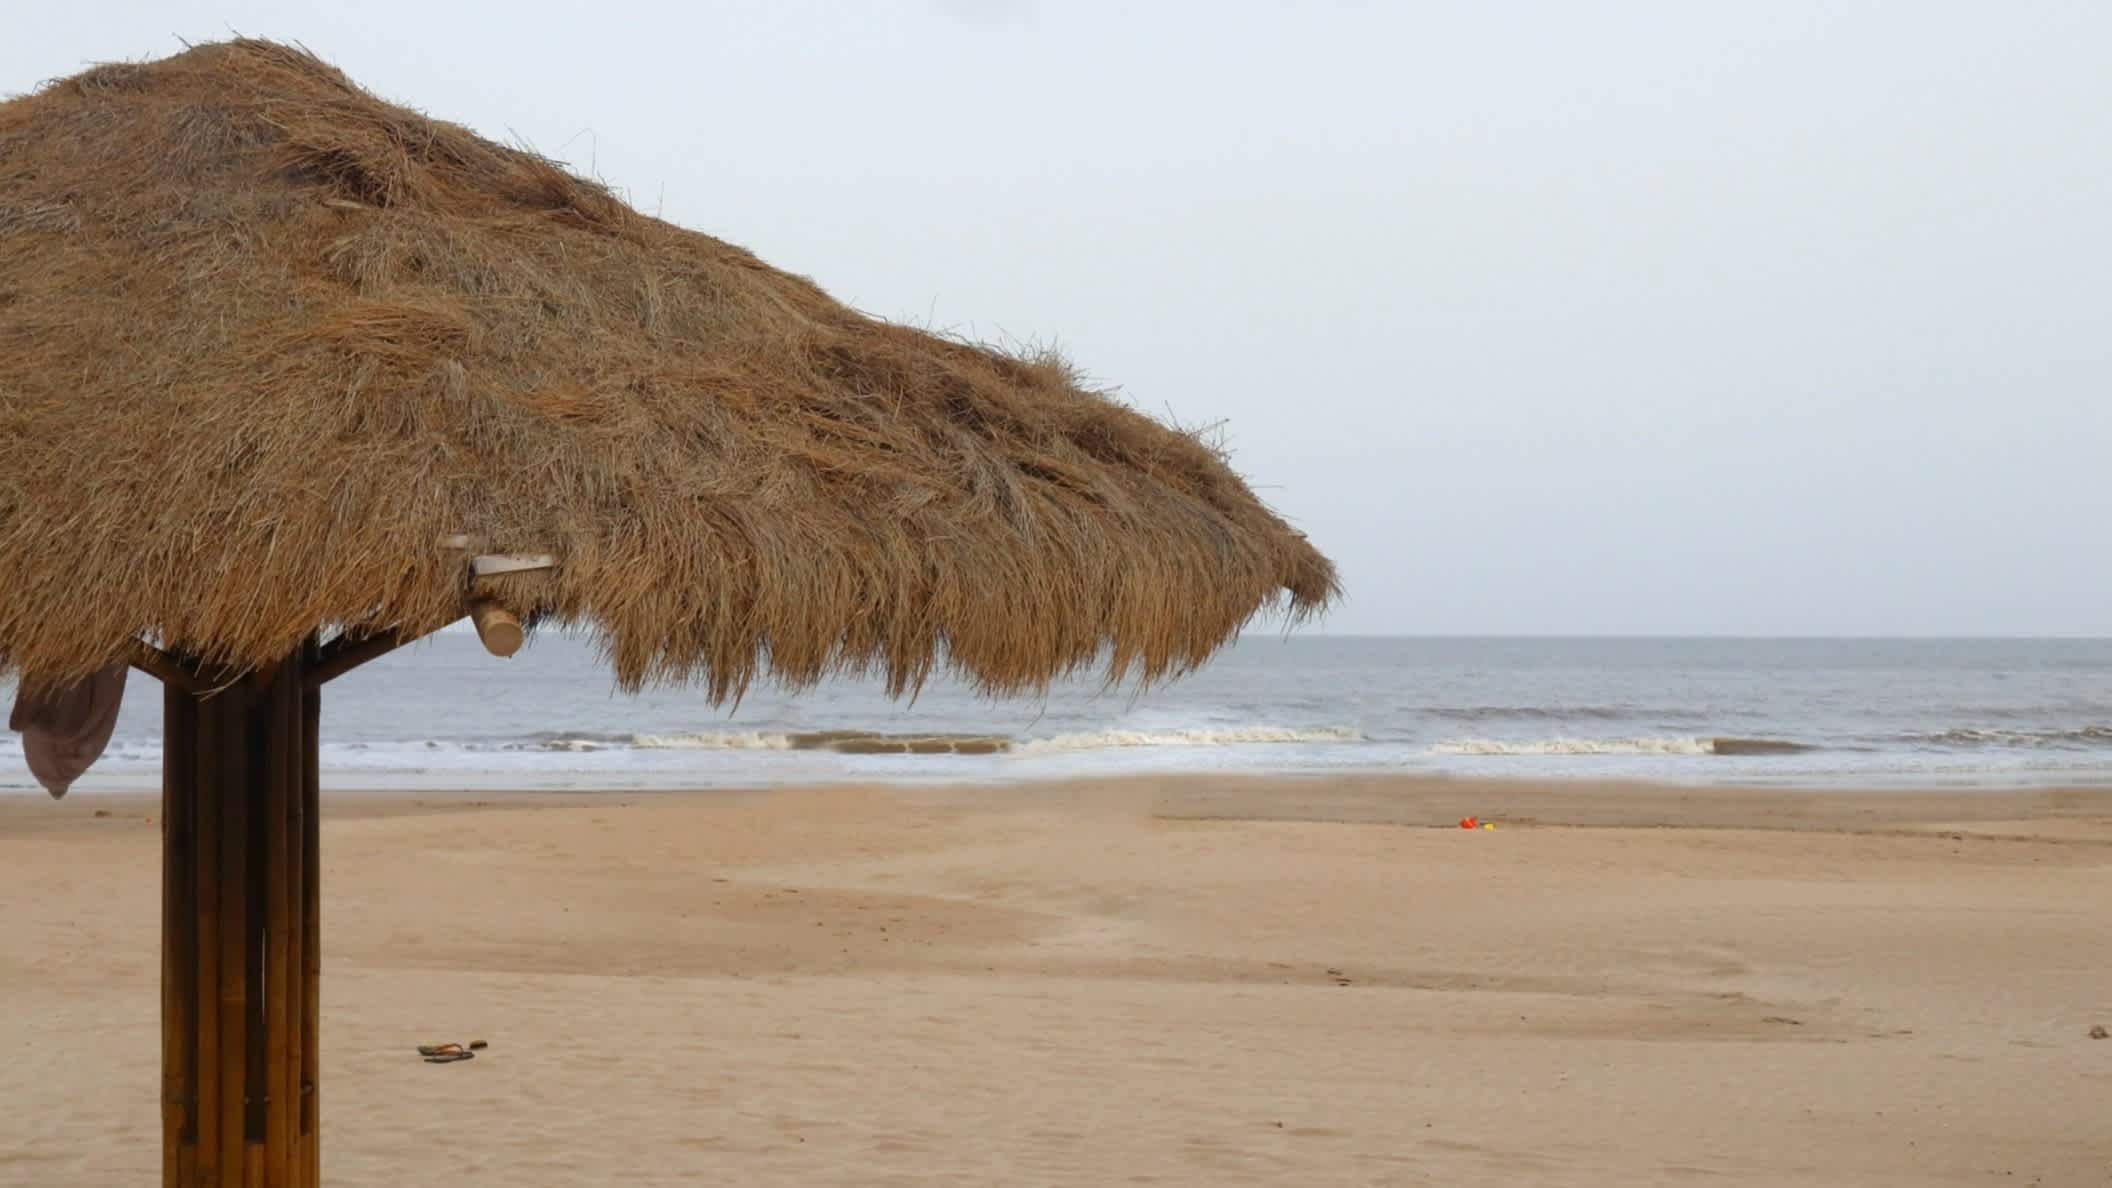 Strohschirm am Ghoghla Strand, Gujarat, Indien bei bewölktem Wetter.